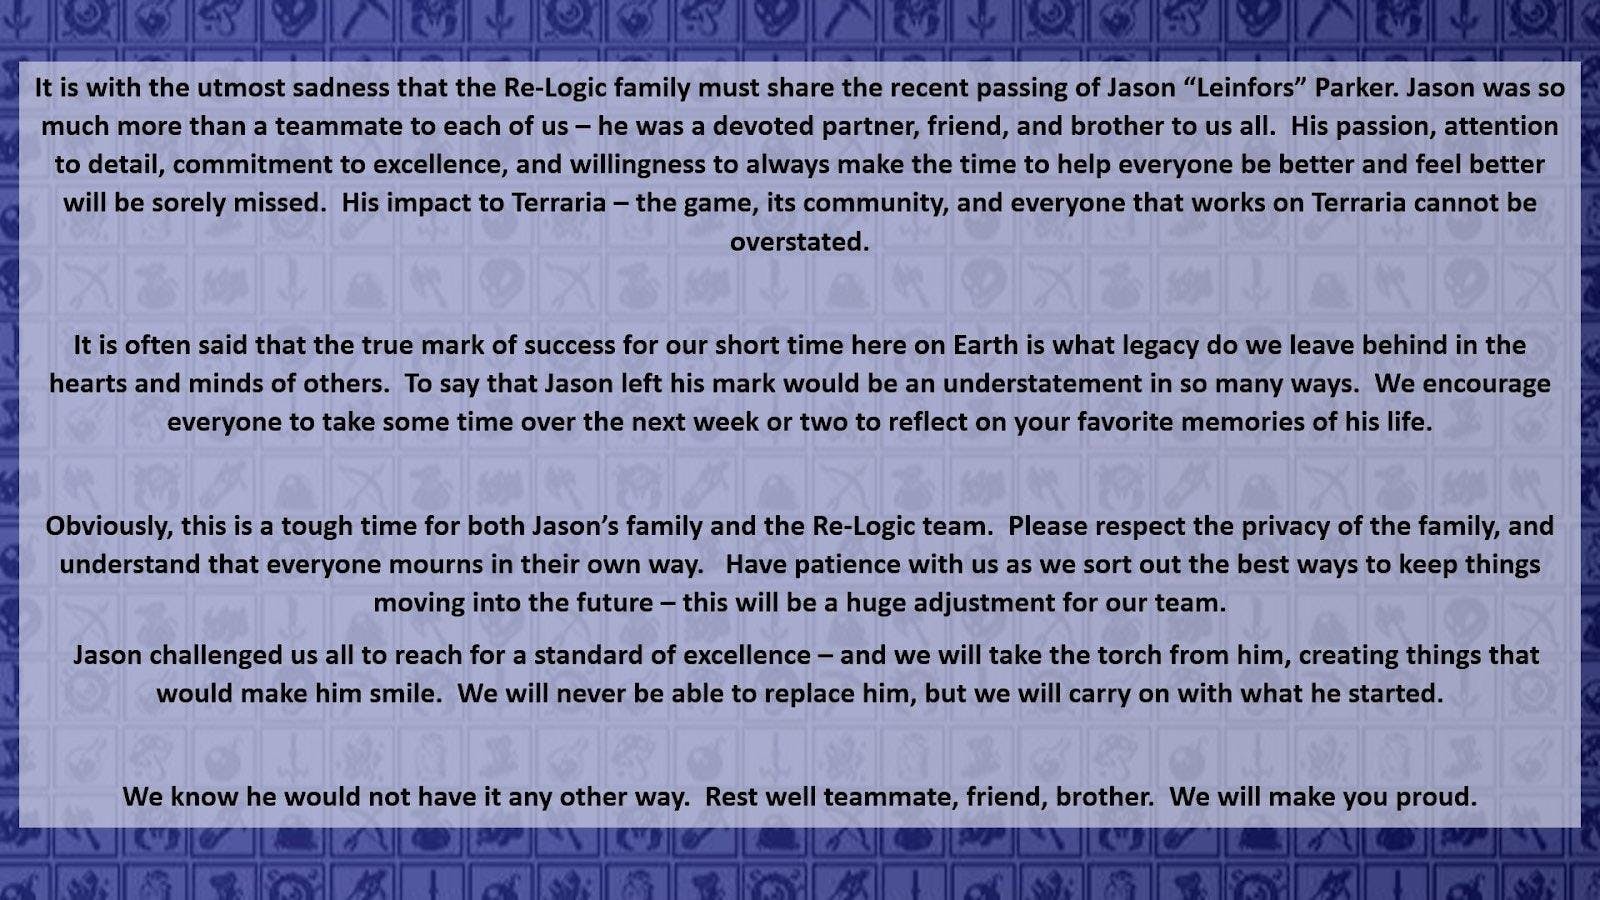 Re-Logic's public message to the community about Jason "Leinfors" Parker's passing.